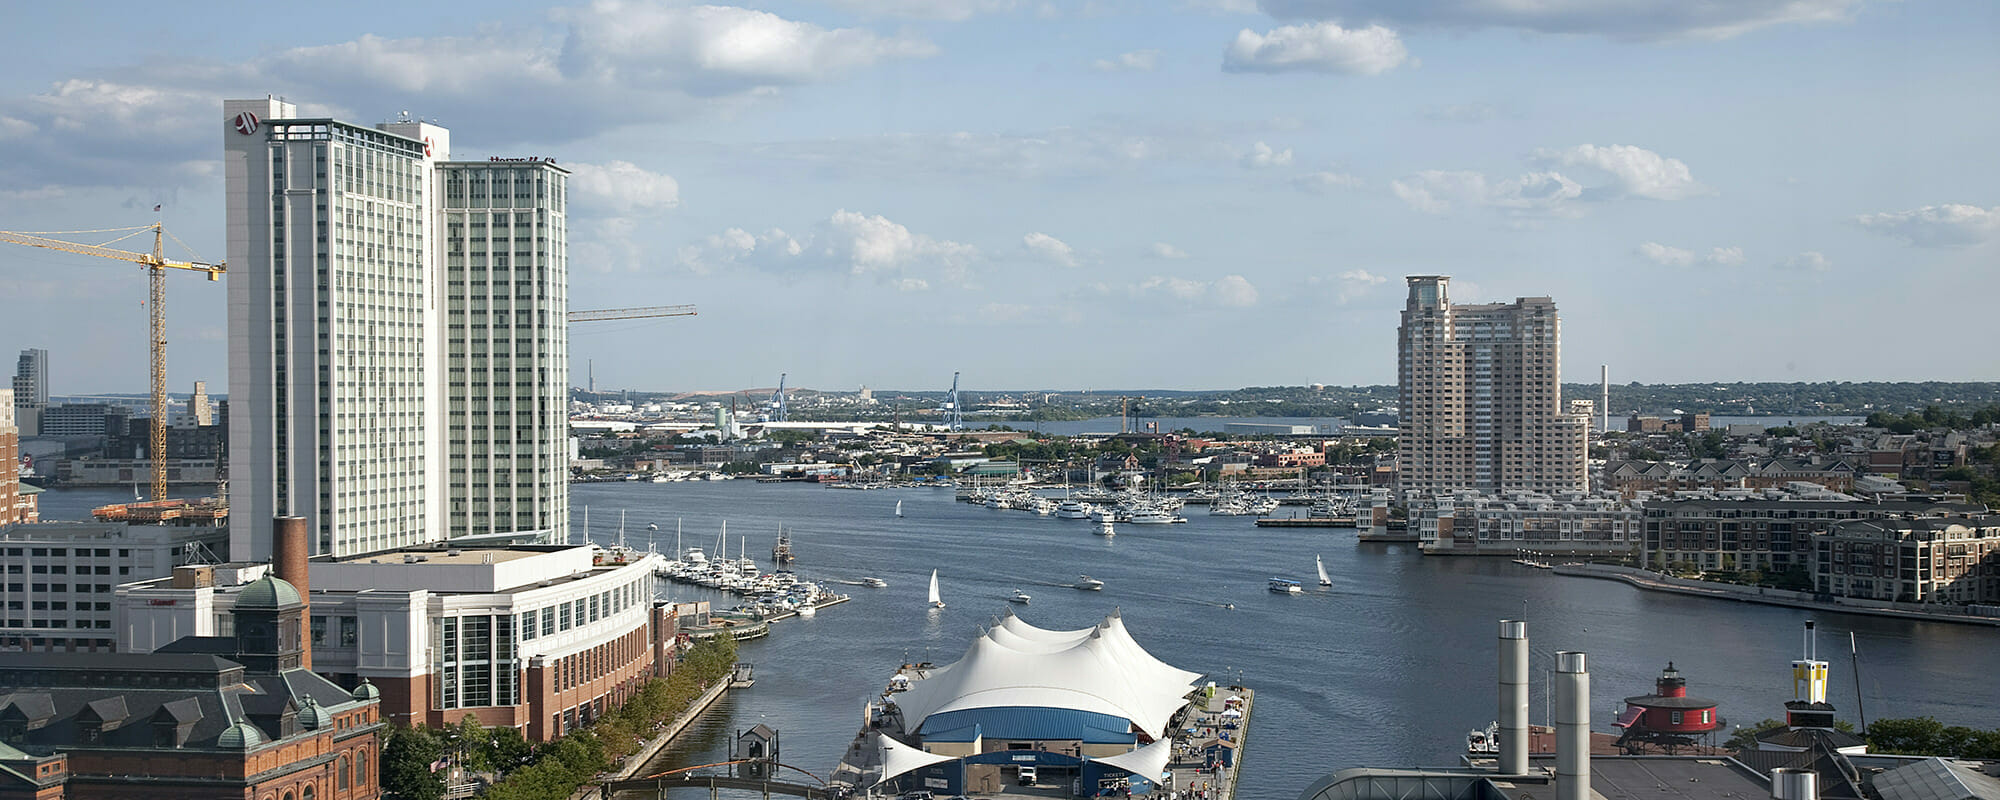 landscape photo of Baltimore